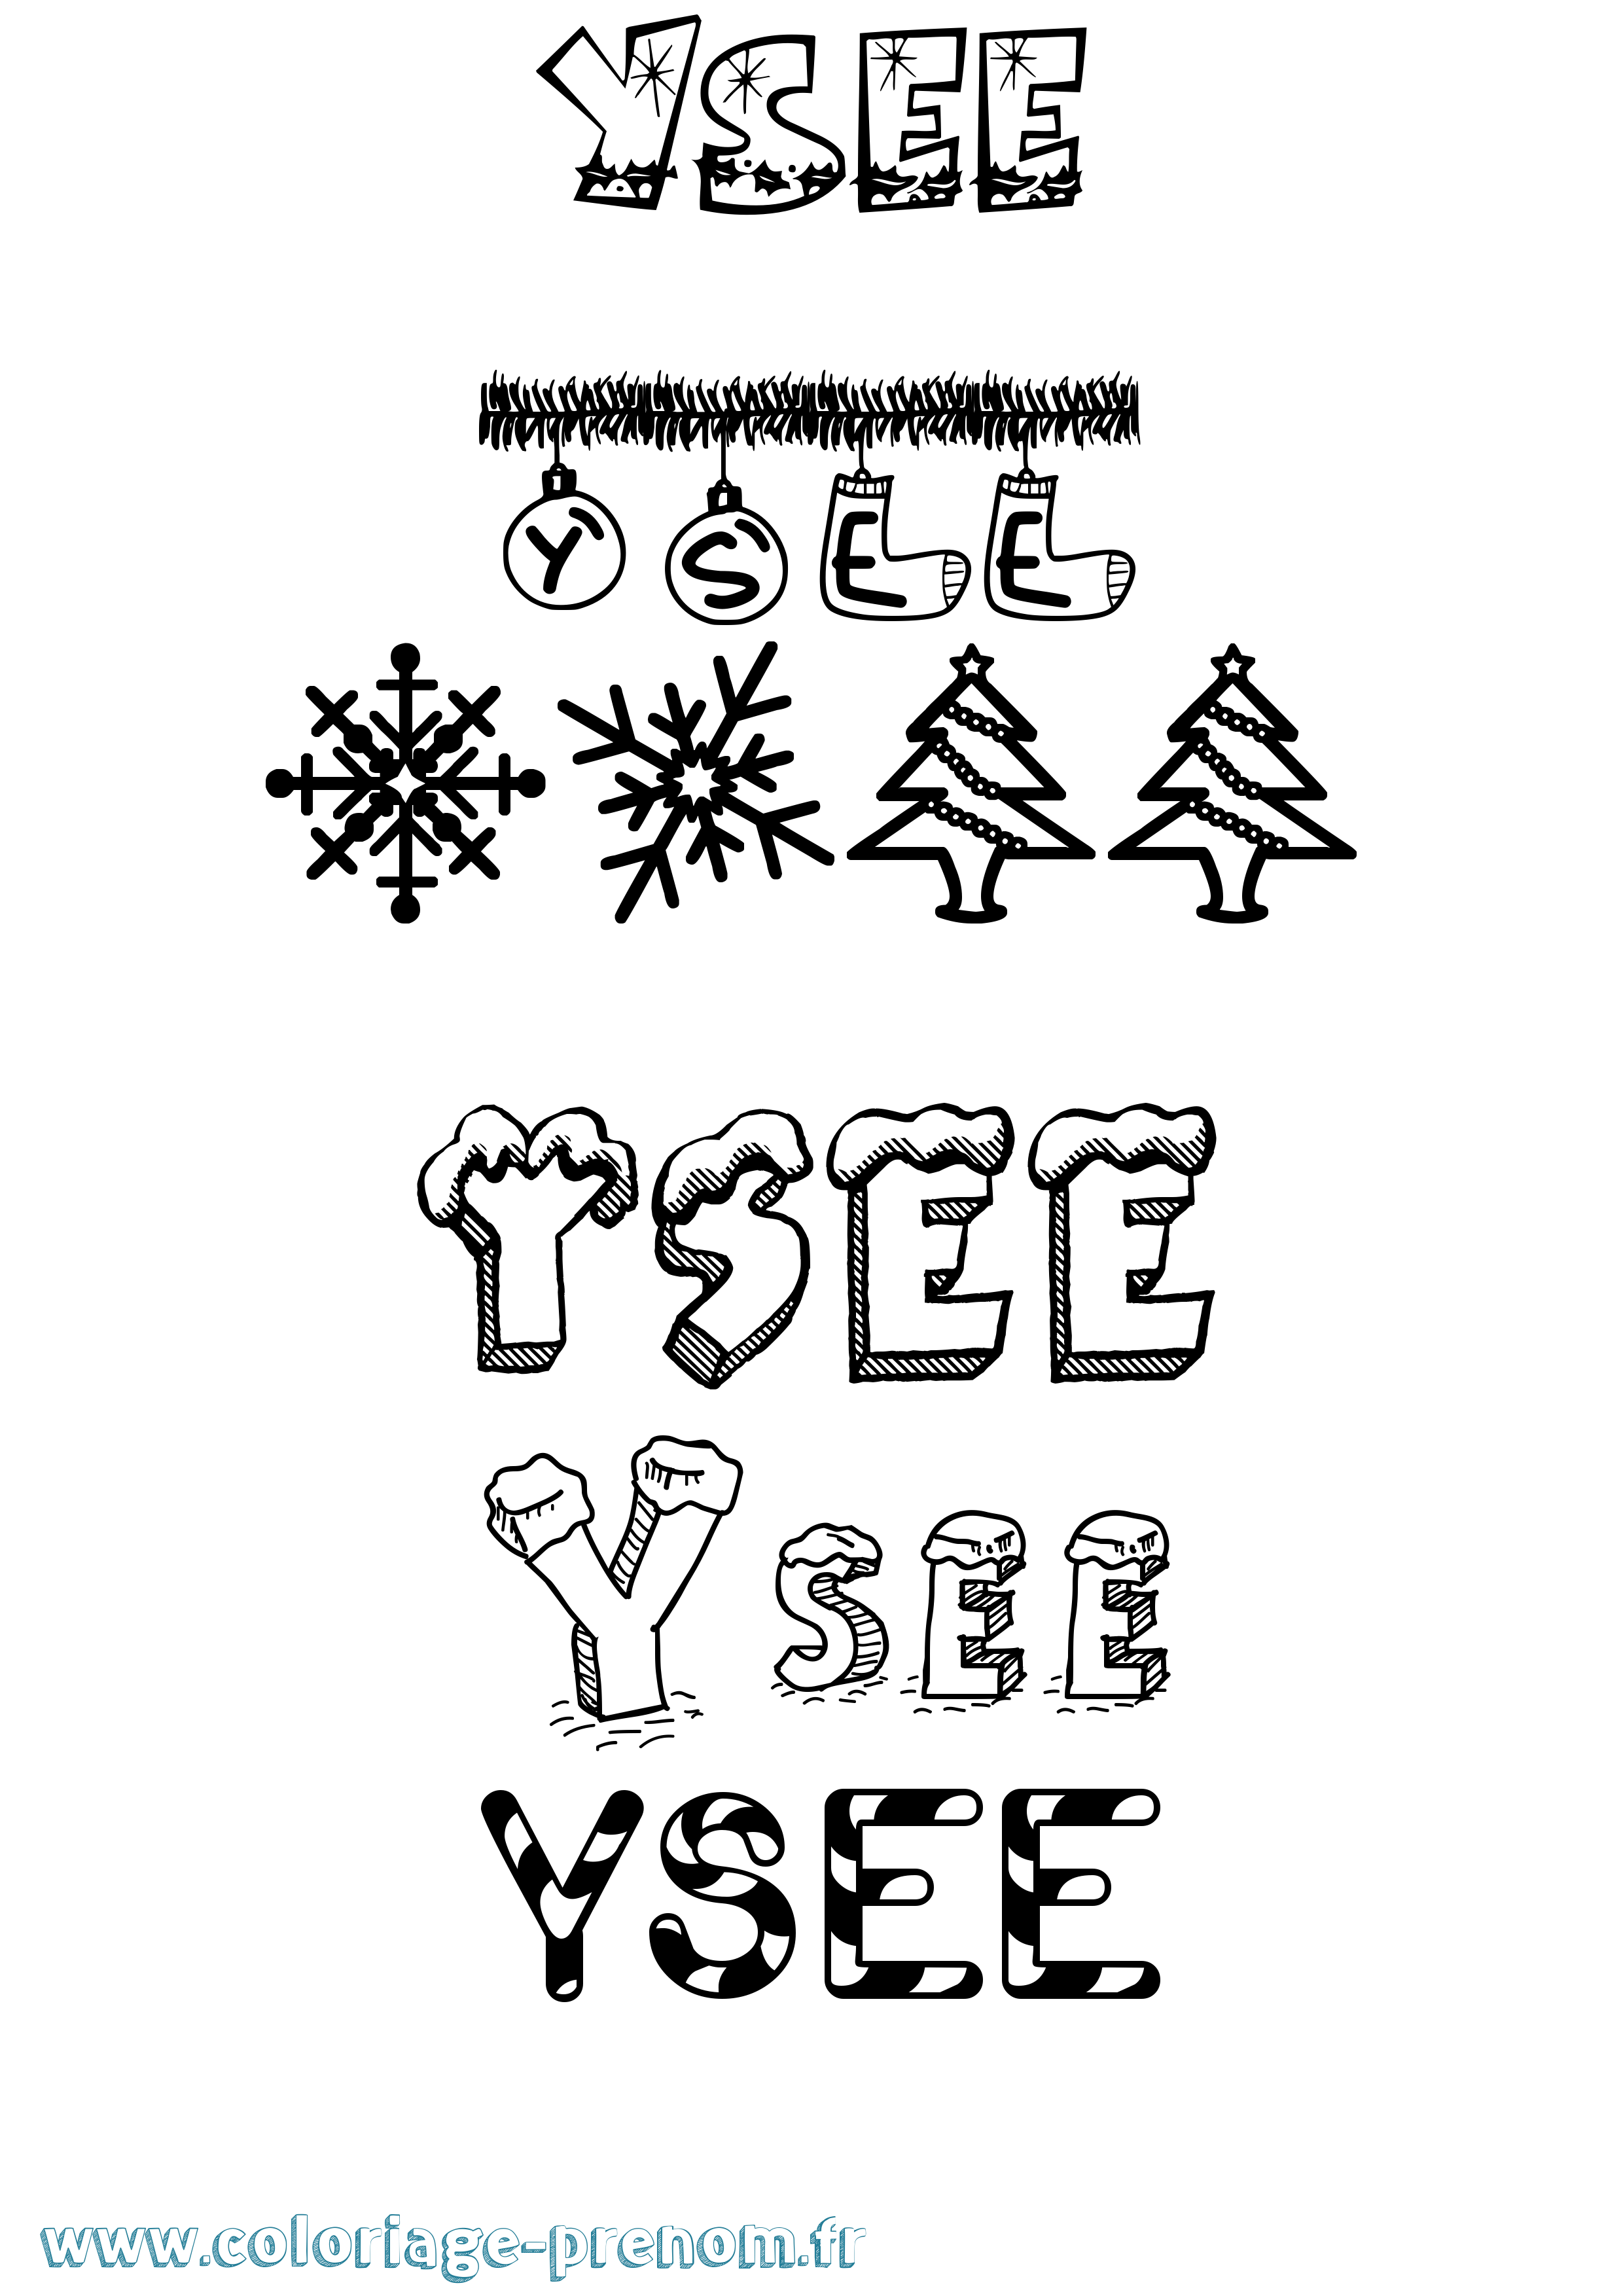 Coloriage prénom Ysee Noël